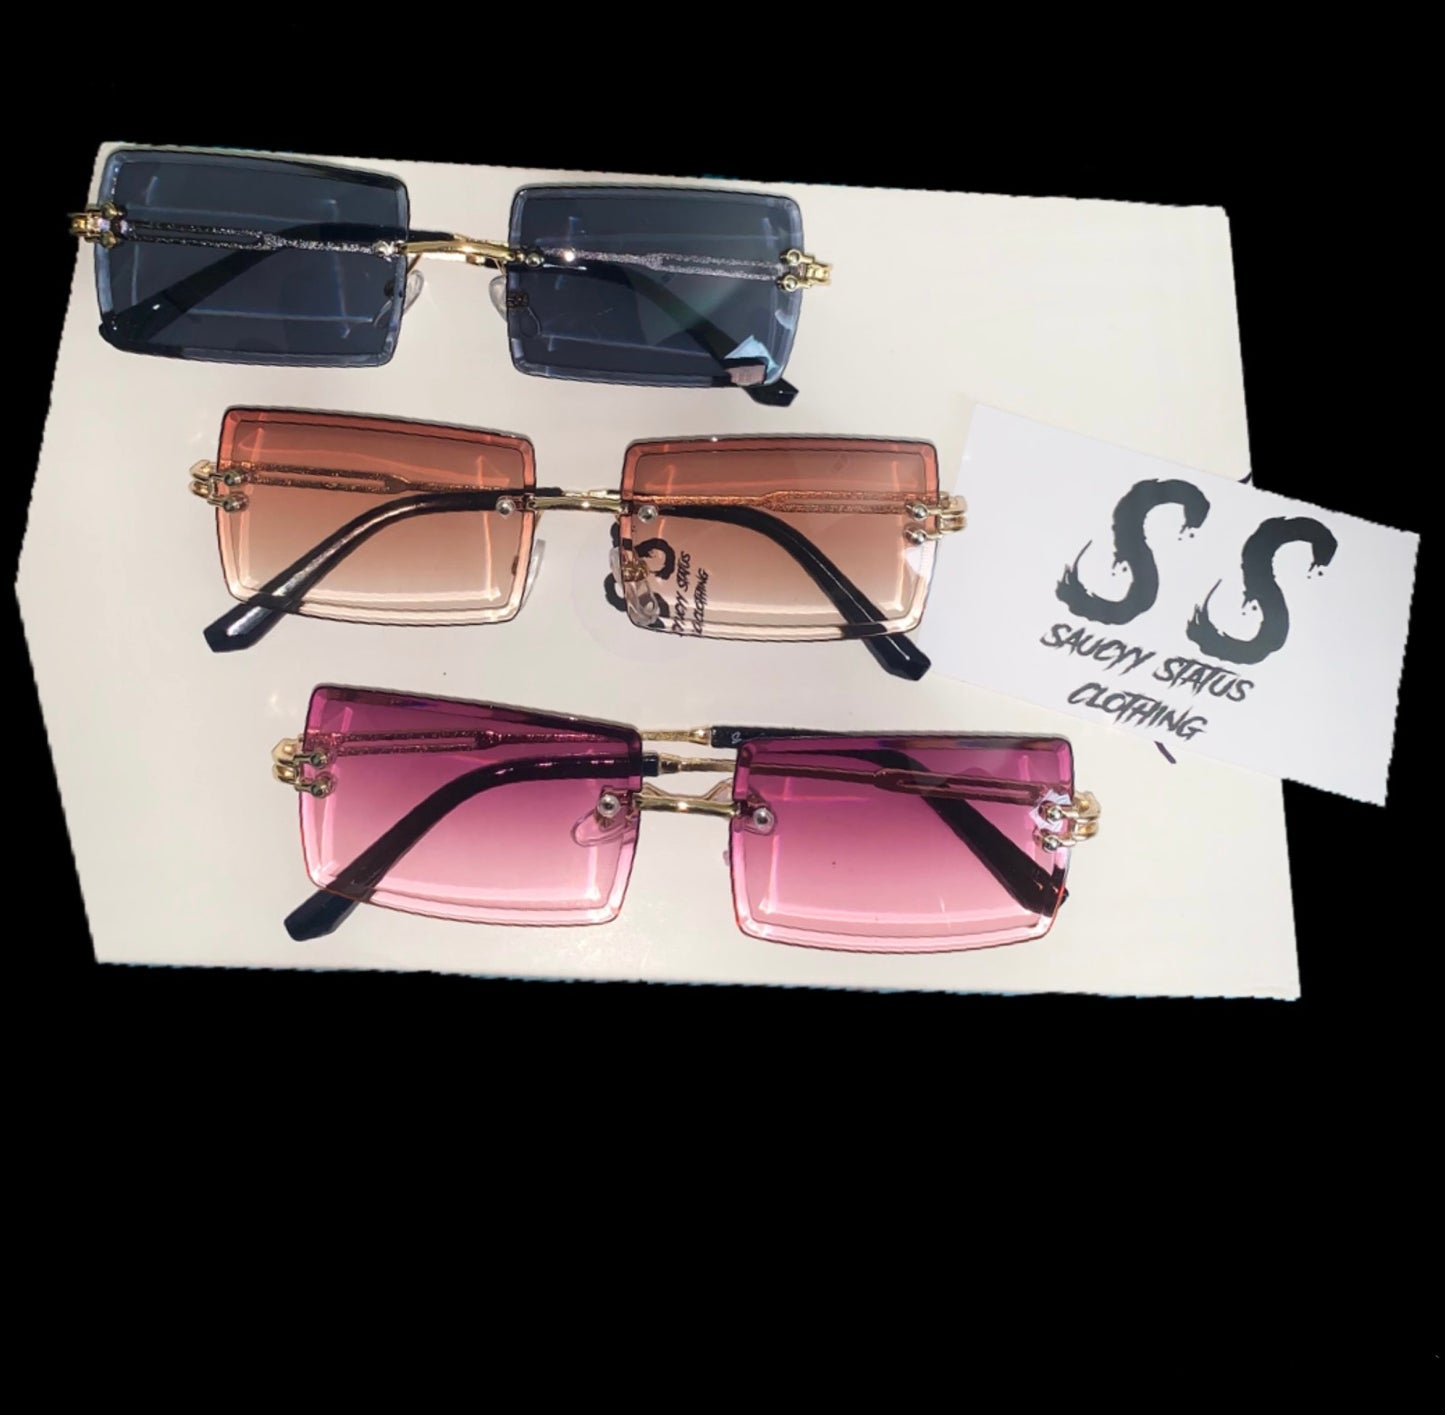 Frameless SS shades